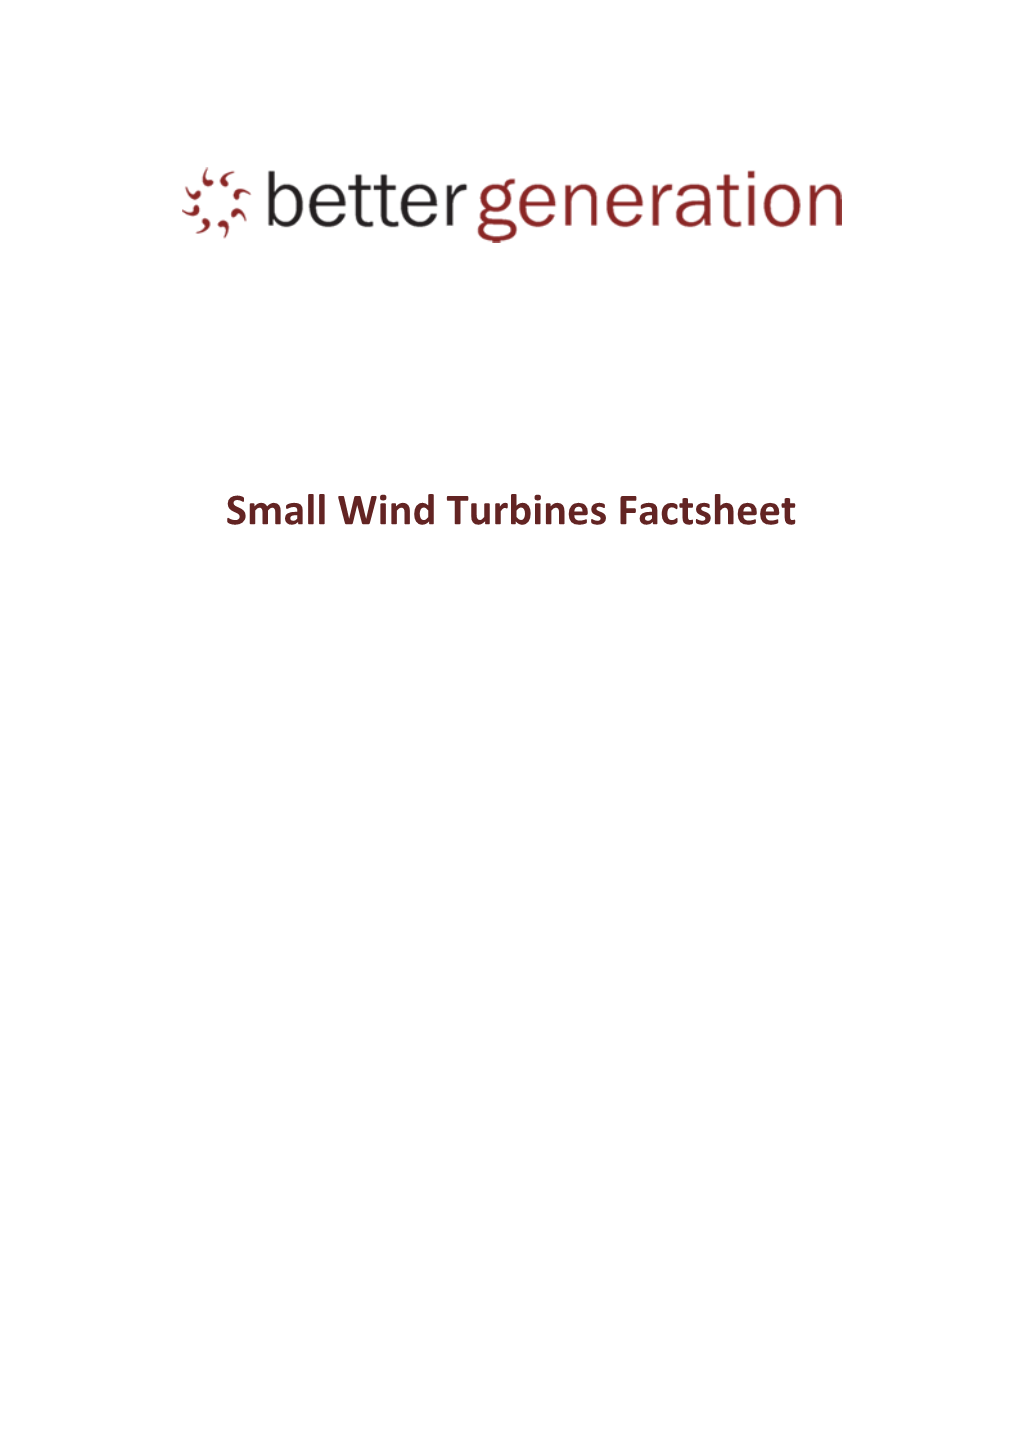 Wind Turbines Factsheet